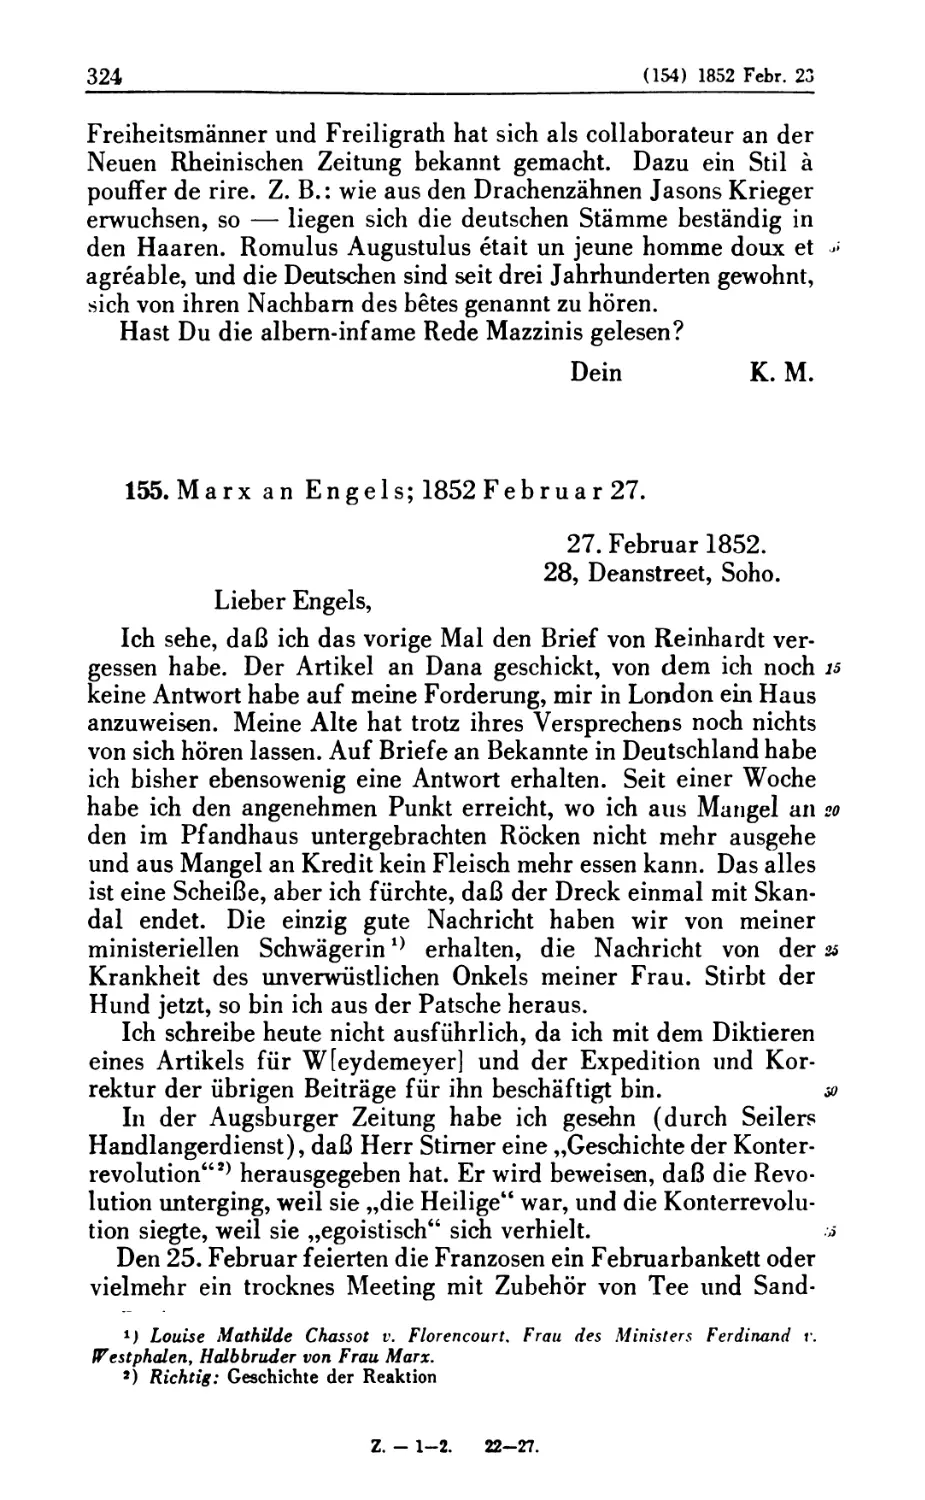 155. Marx an Engels; 1852 Februar 27